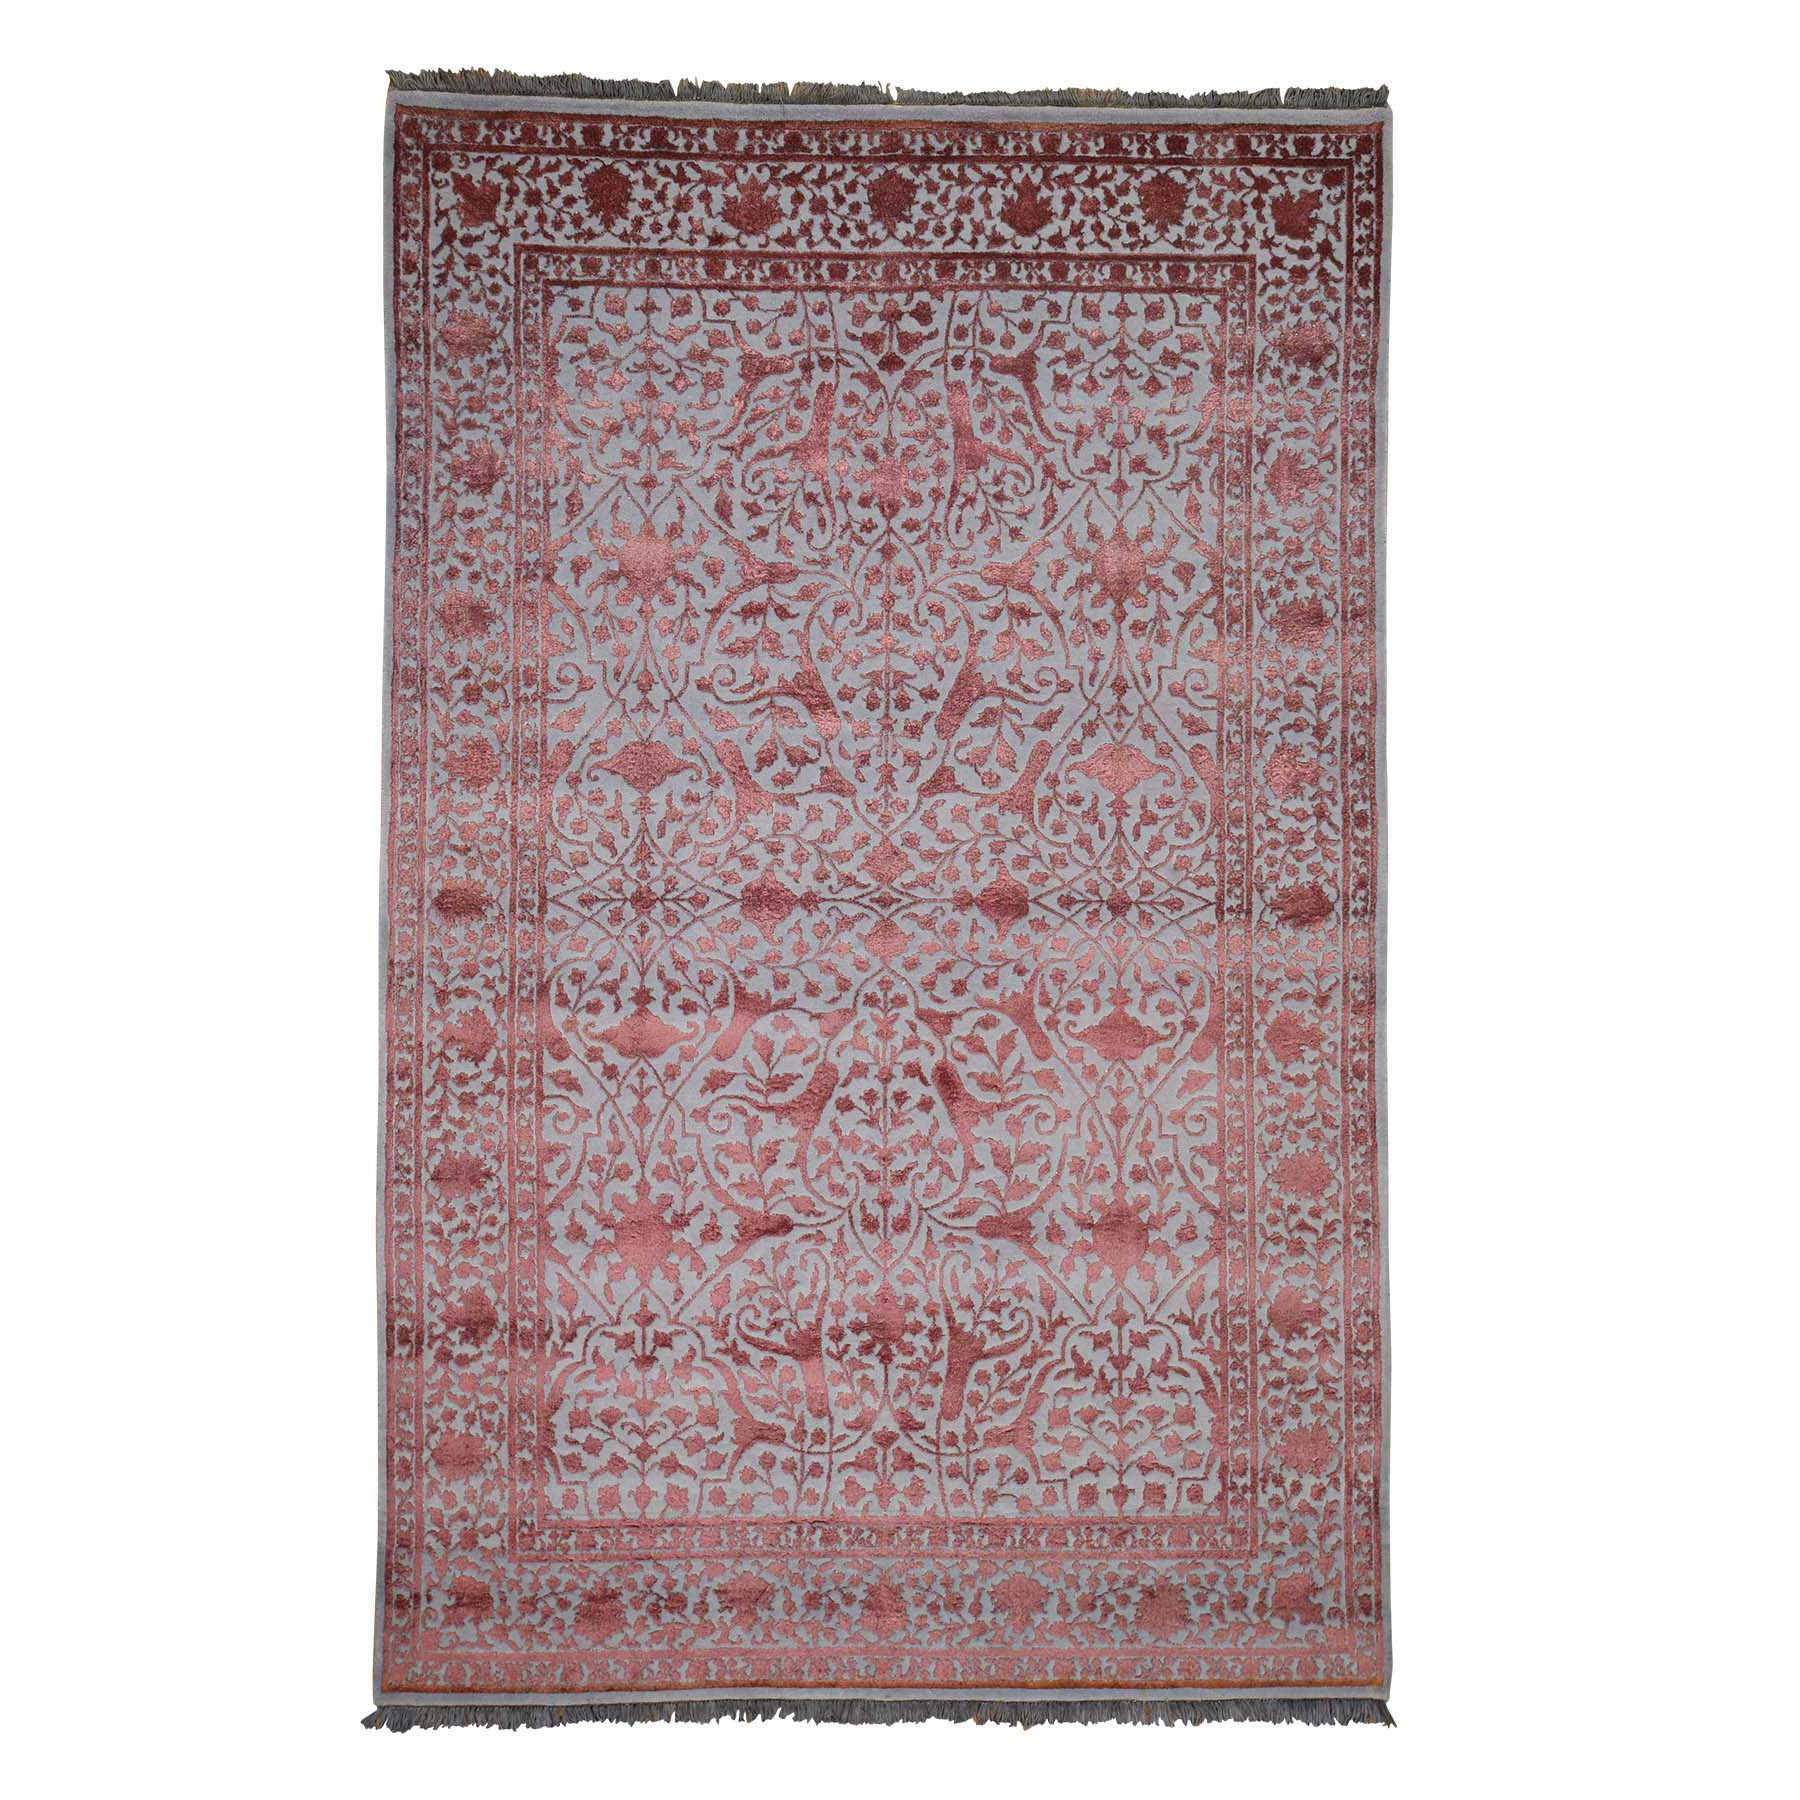 5'9"x9' Kashan Dense Weave Wool And Silk Hand Woven Pure Wool Rug 